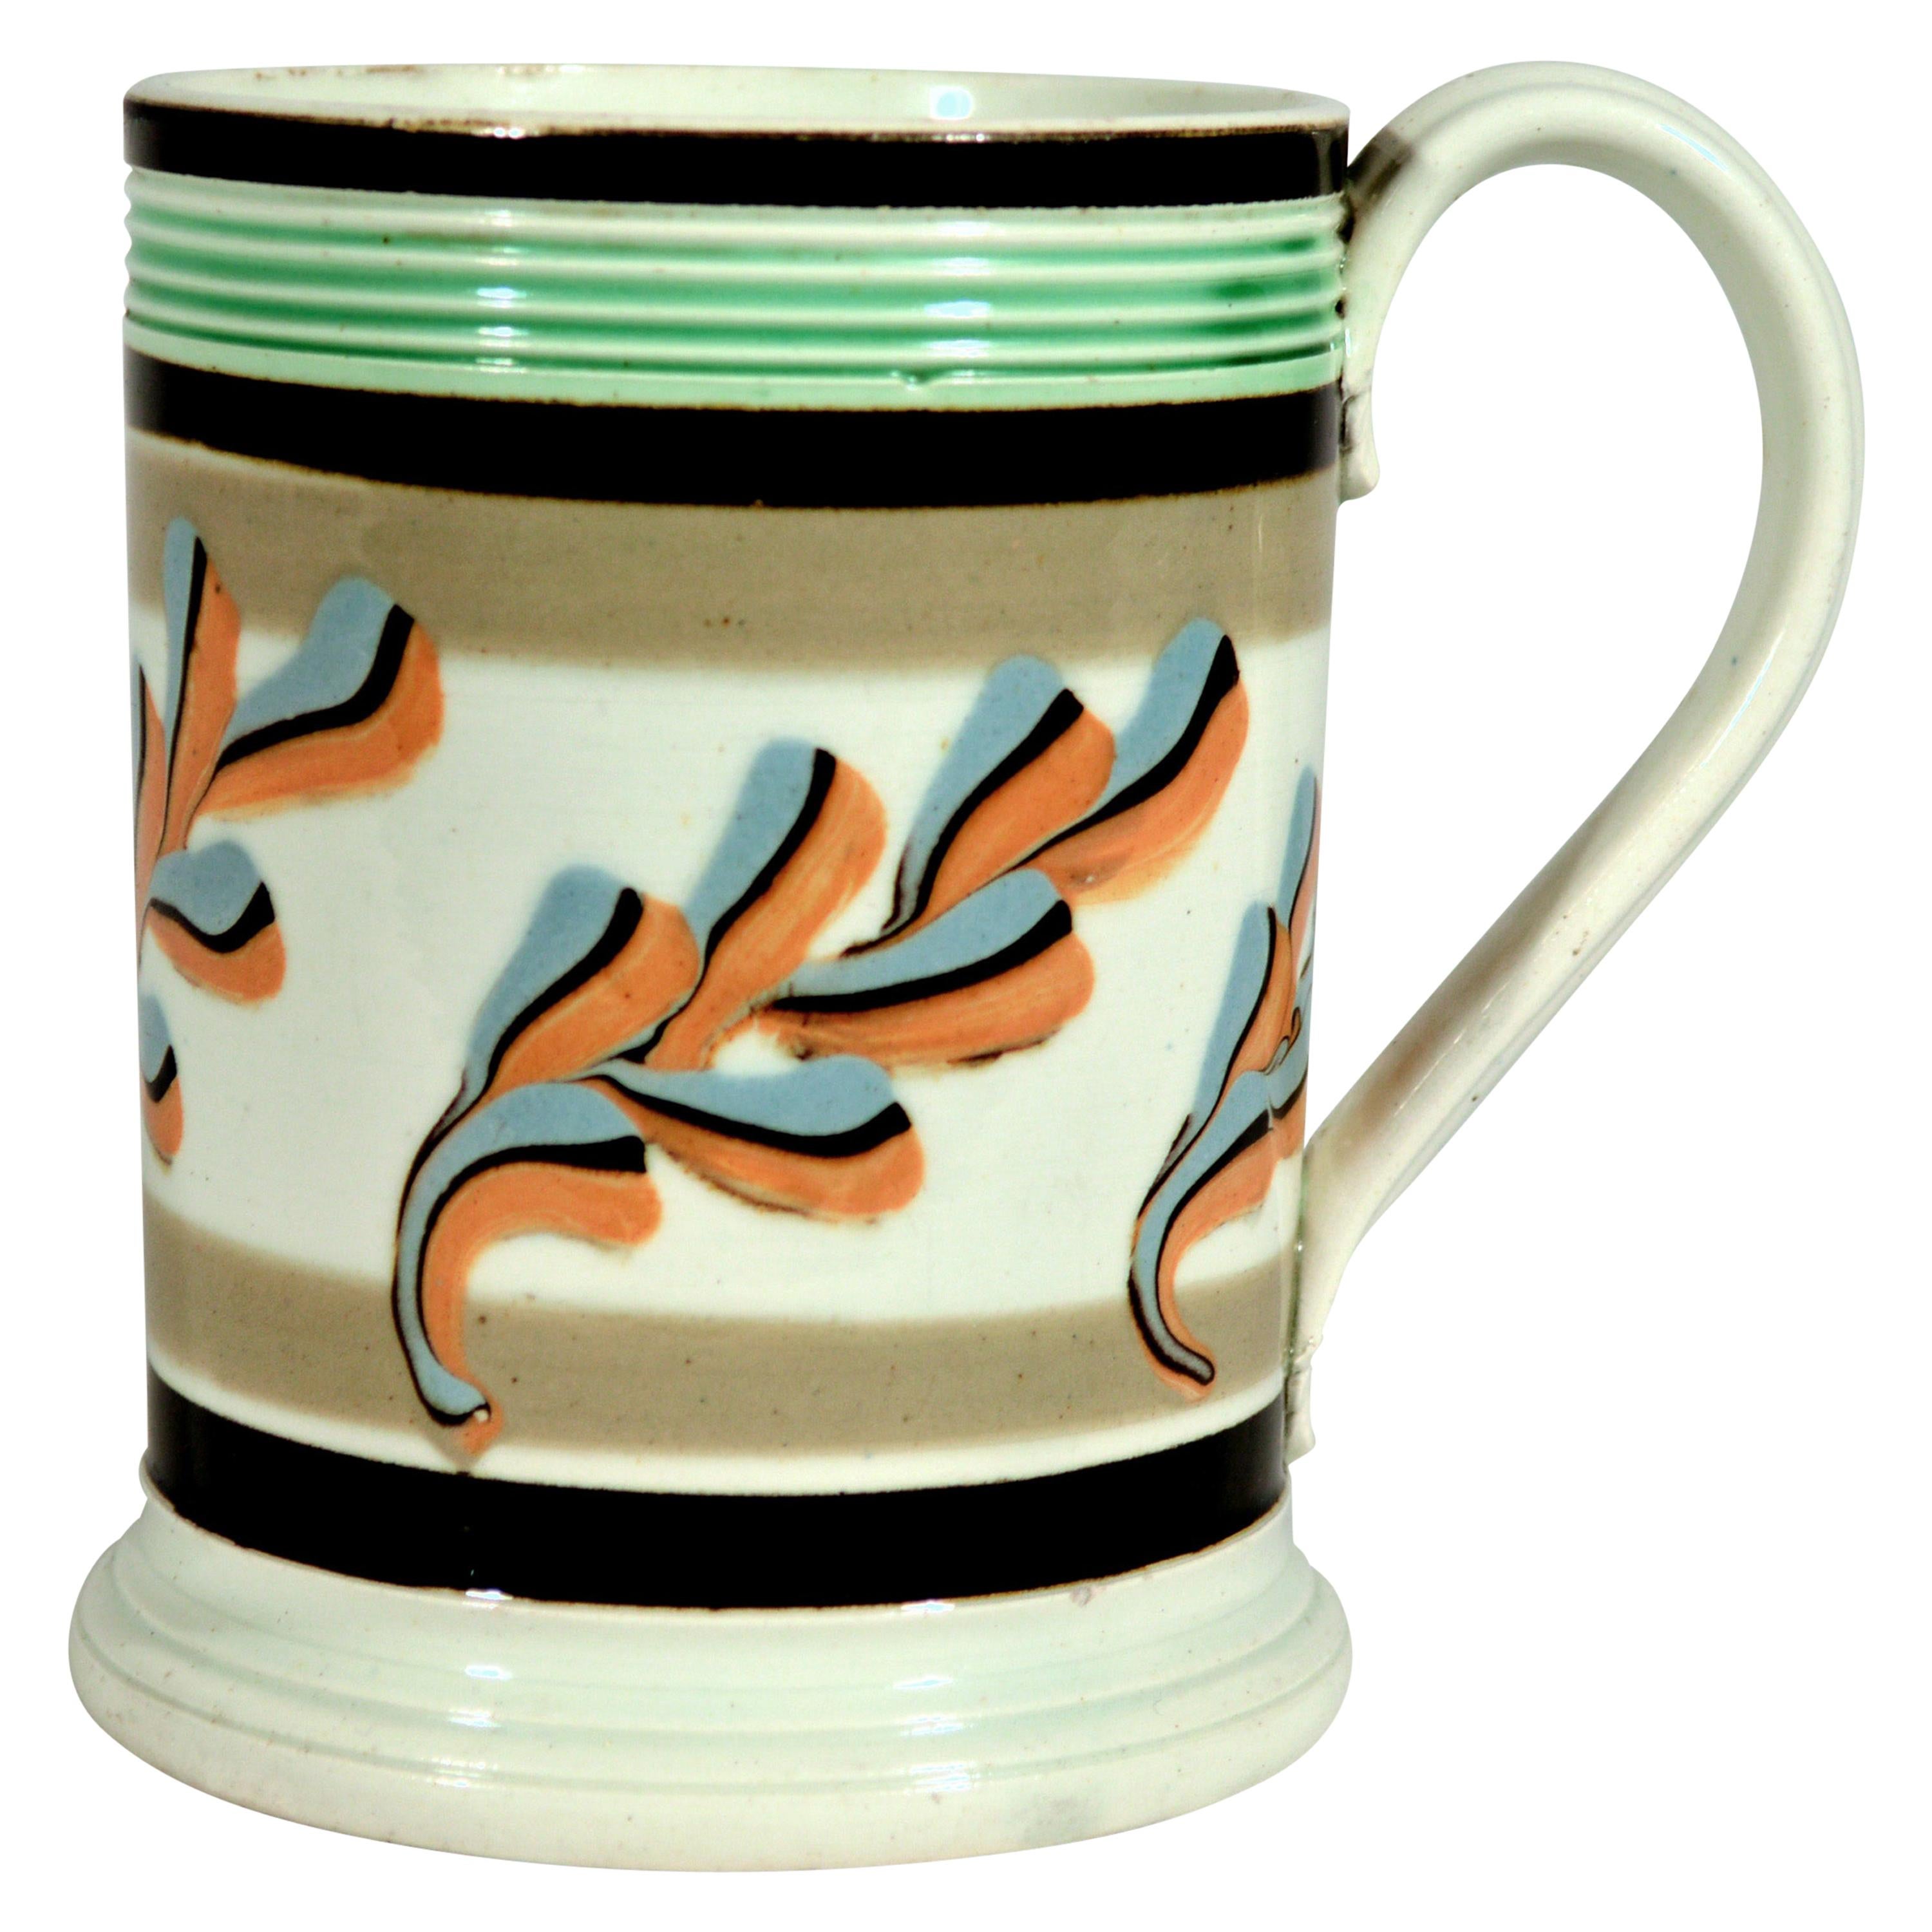 Mocha Pottery Mug with Oak Leaf Decoration, Circa 1800